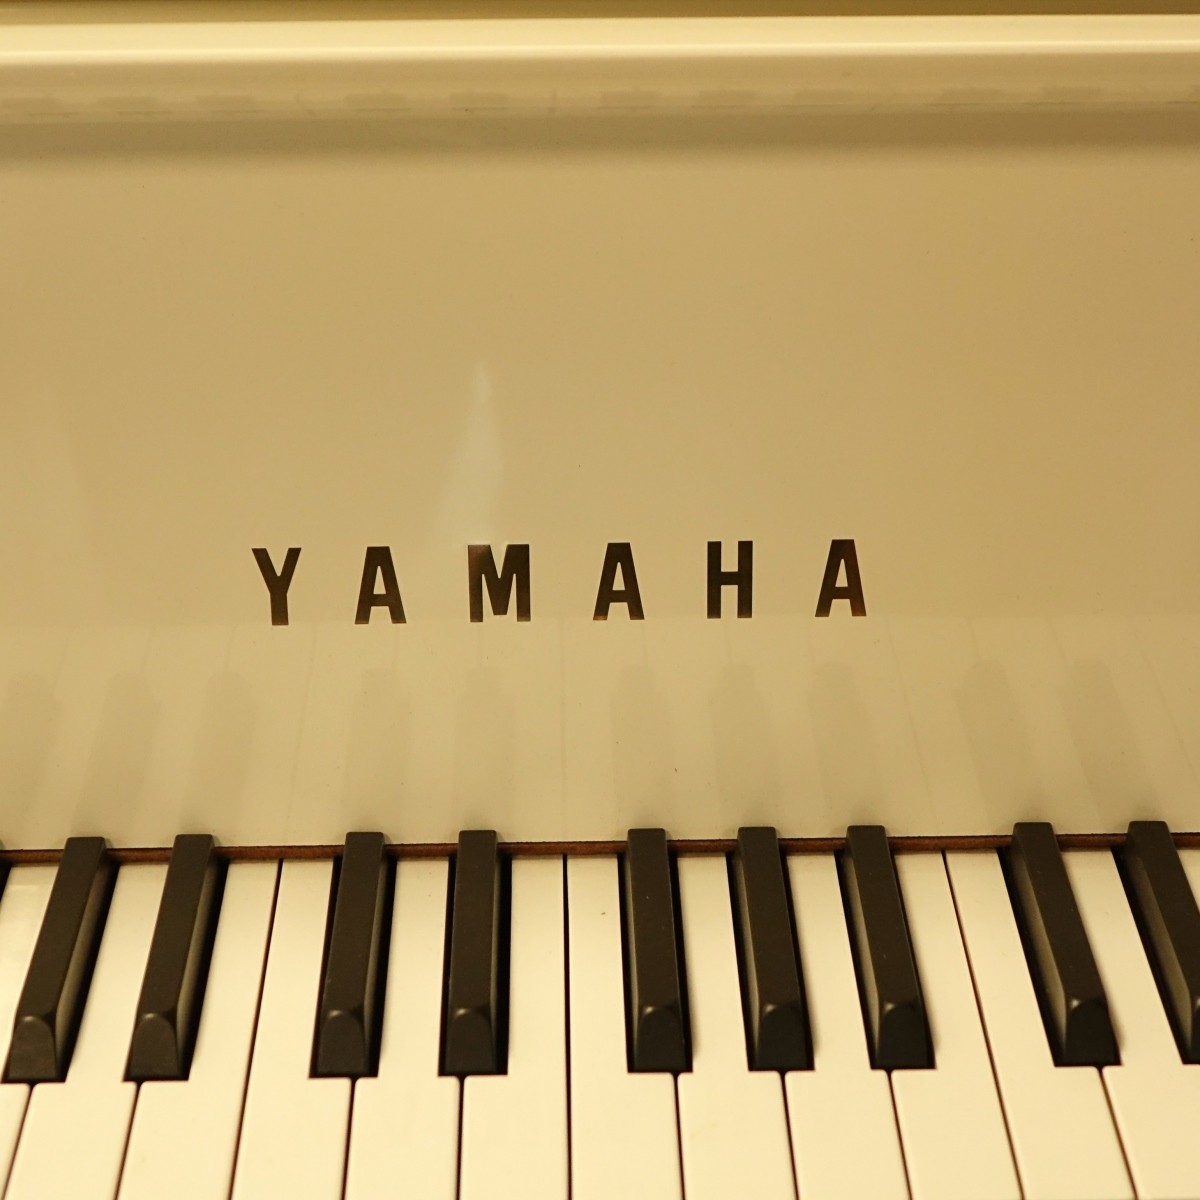 Yamaha White Baby Grand Piano Model GH1